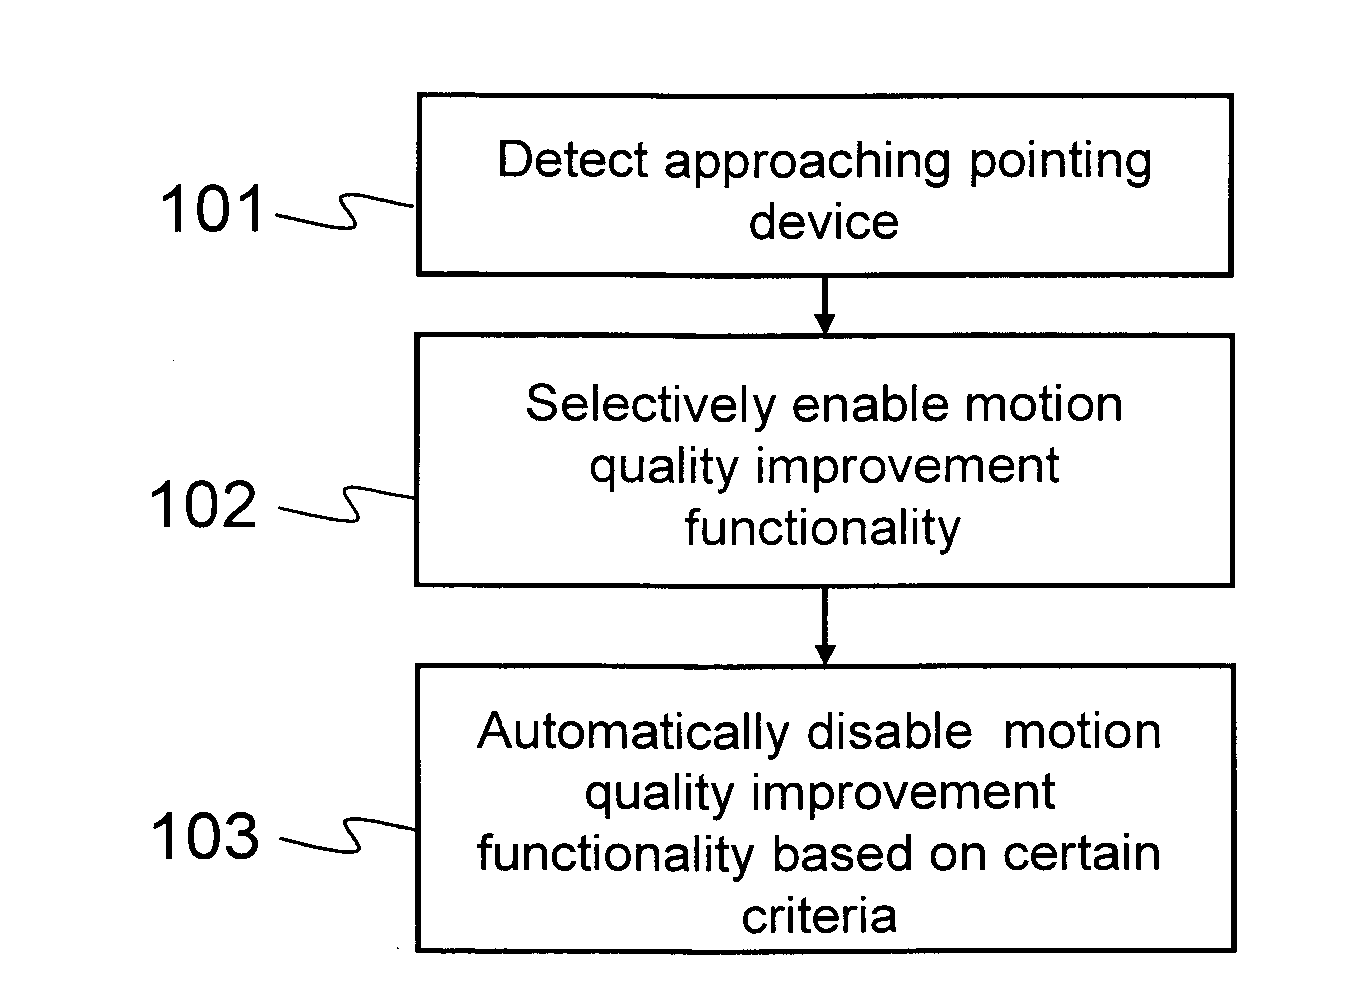 Display motion quality improvement